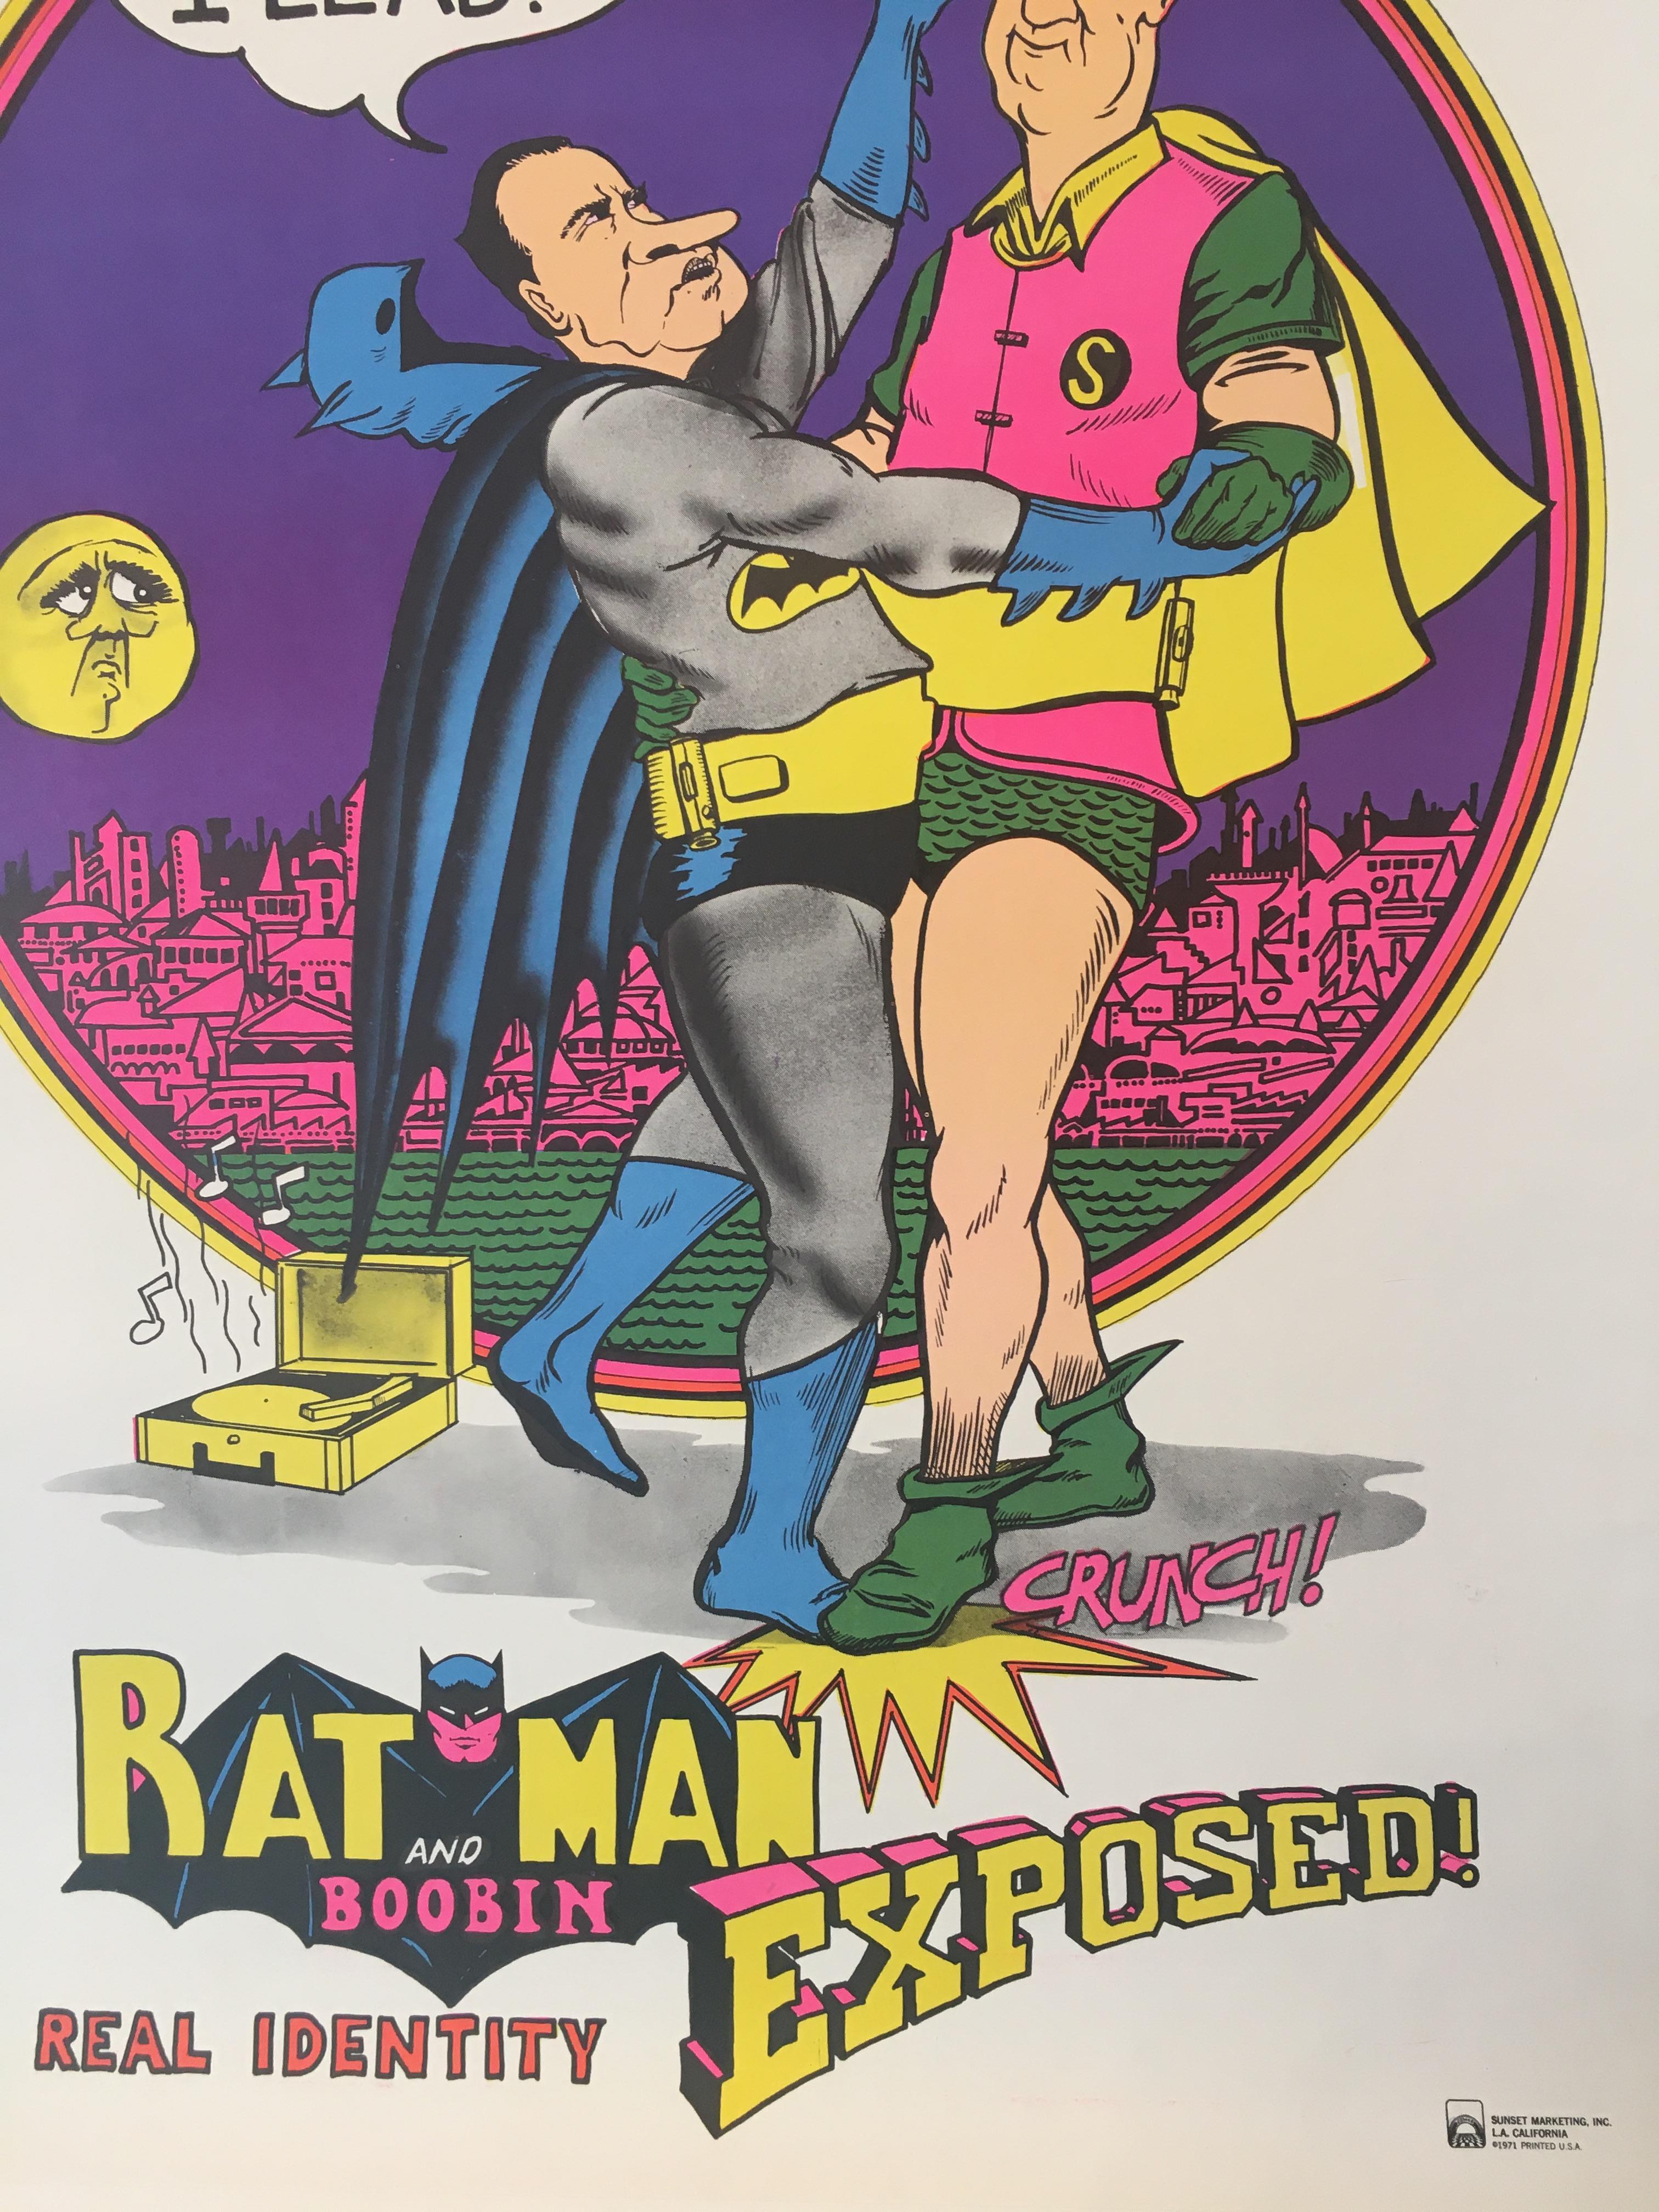 Modern 'Ratman and Boobin Real Identity Exposed' Original Vintage American Poster, 1970